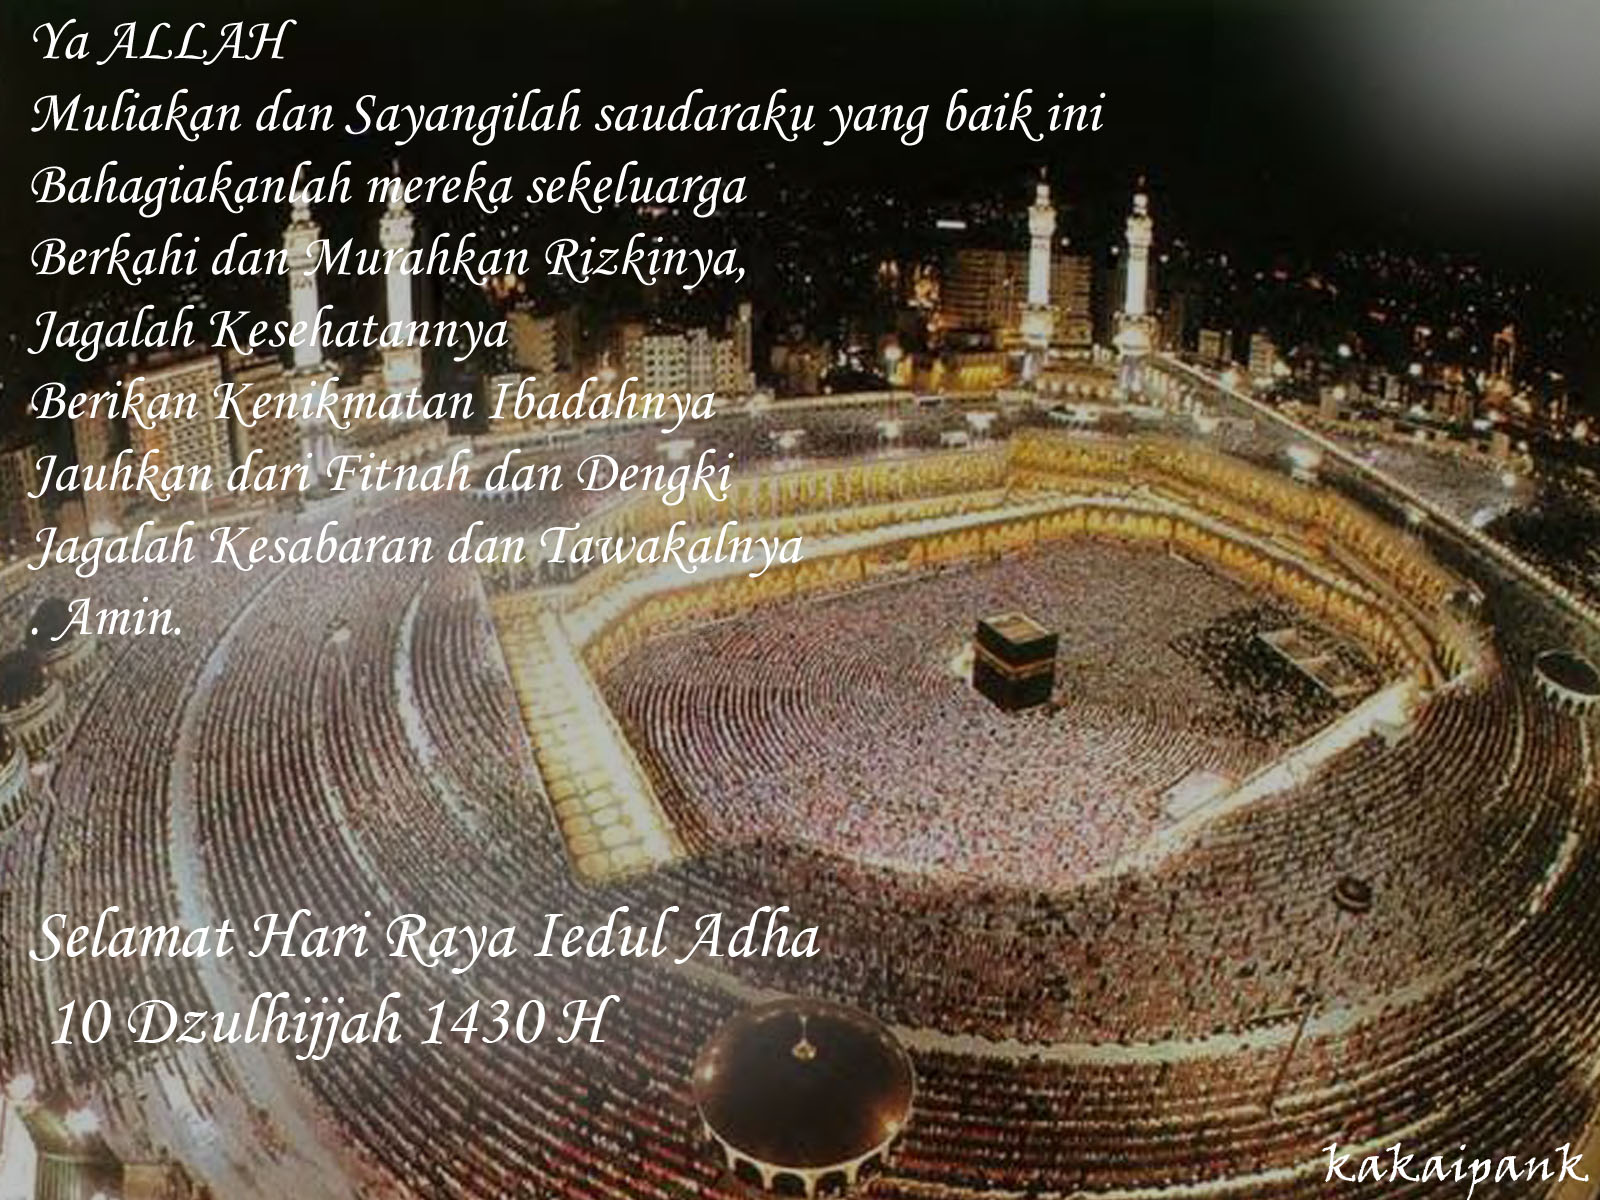 Selamat Hari Raya Idul Adha 1430 H  the collection of 